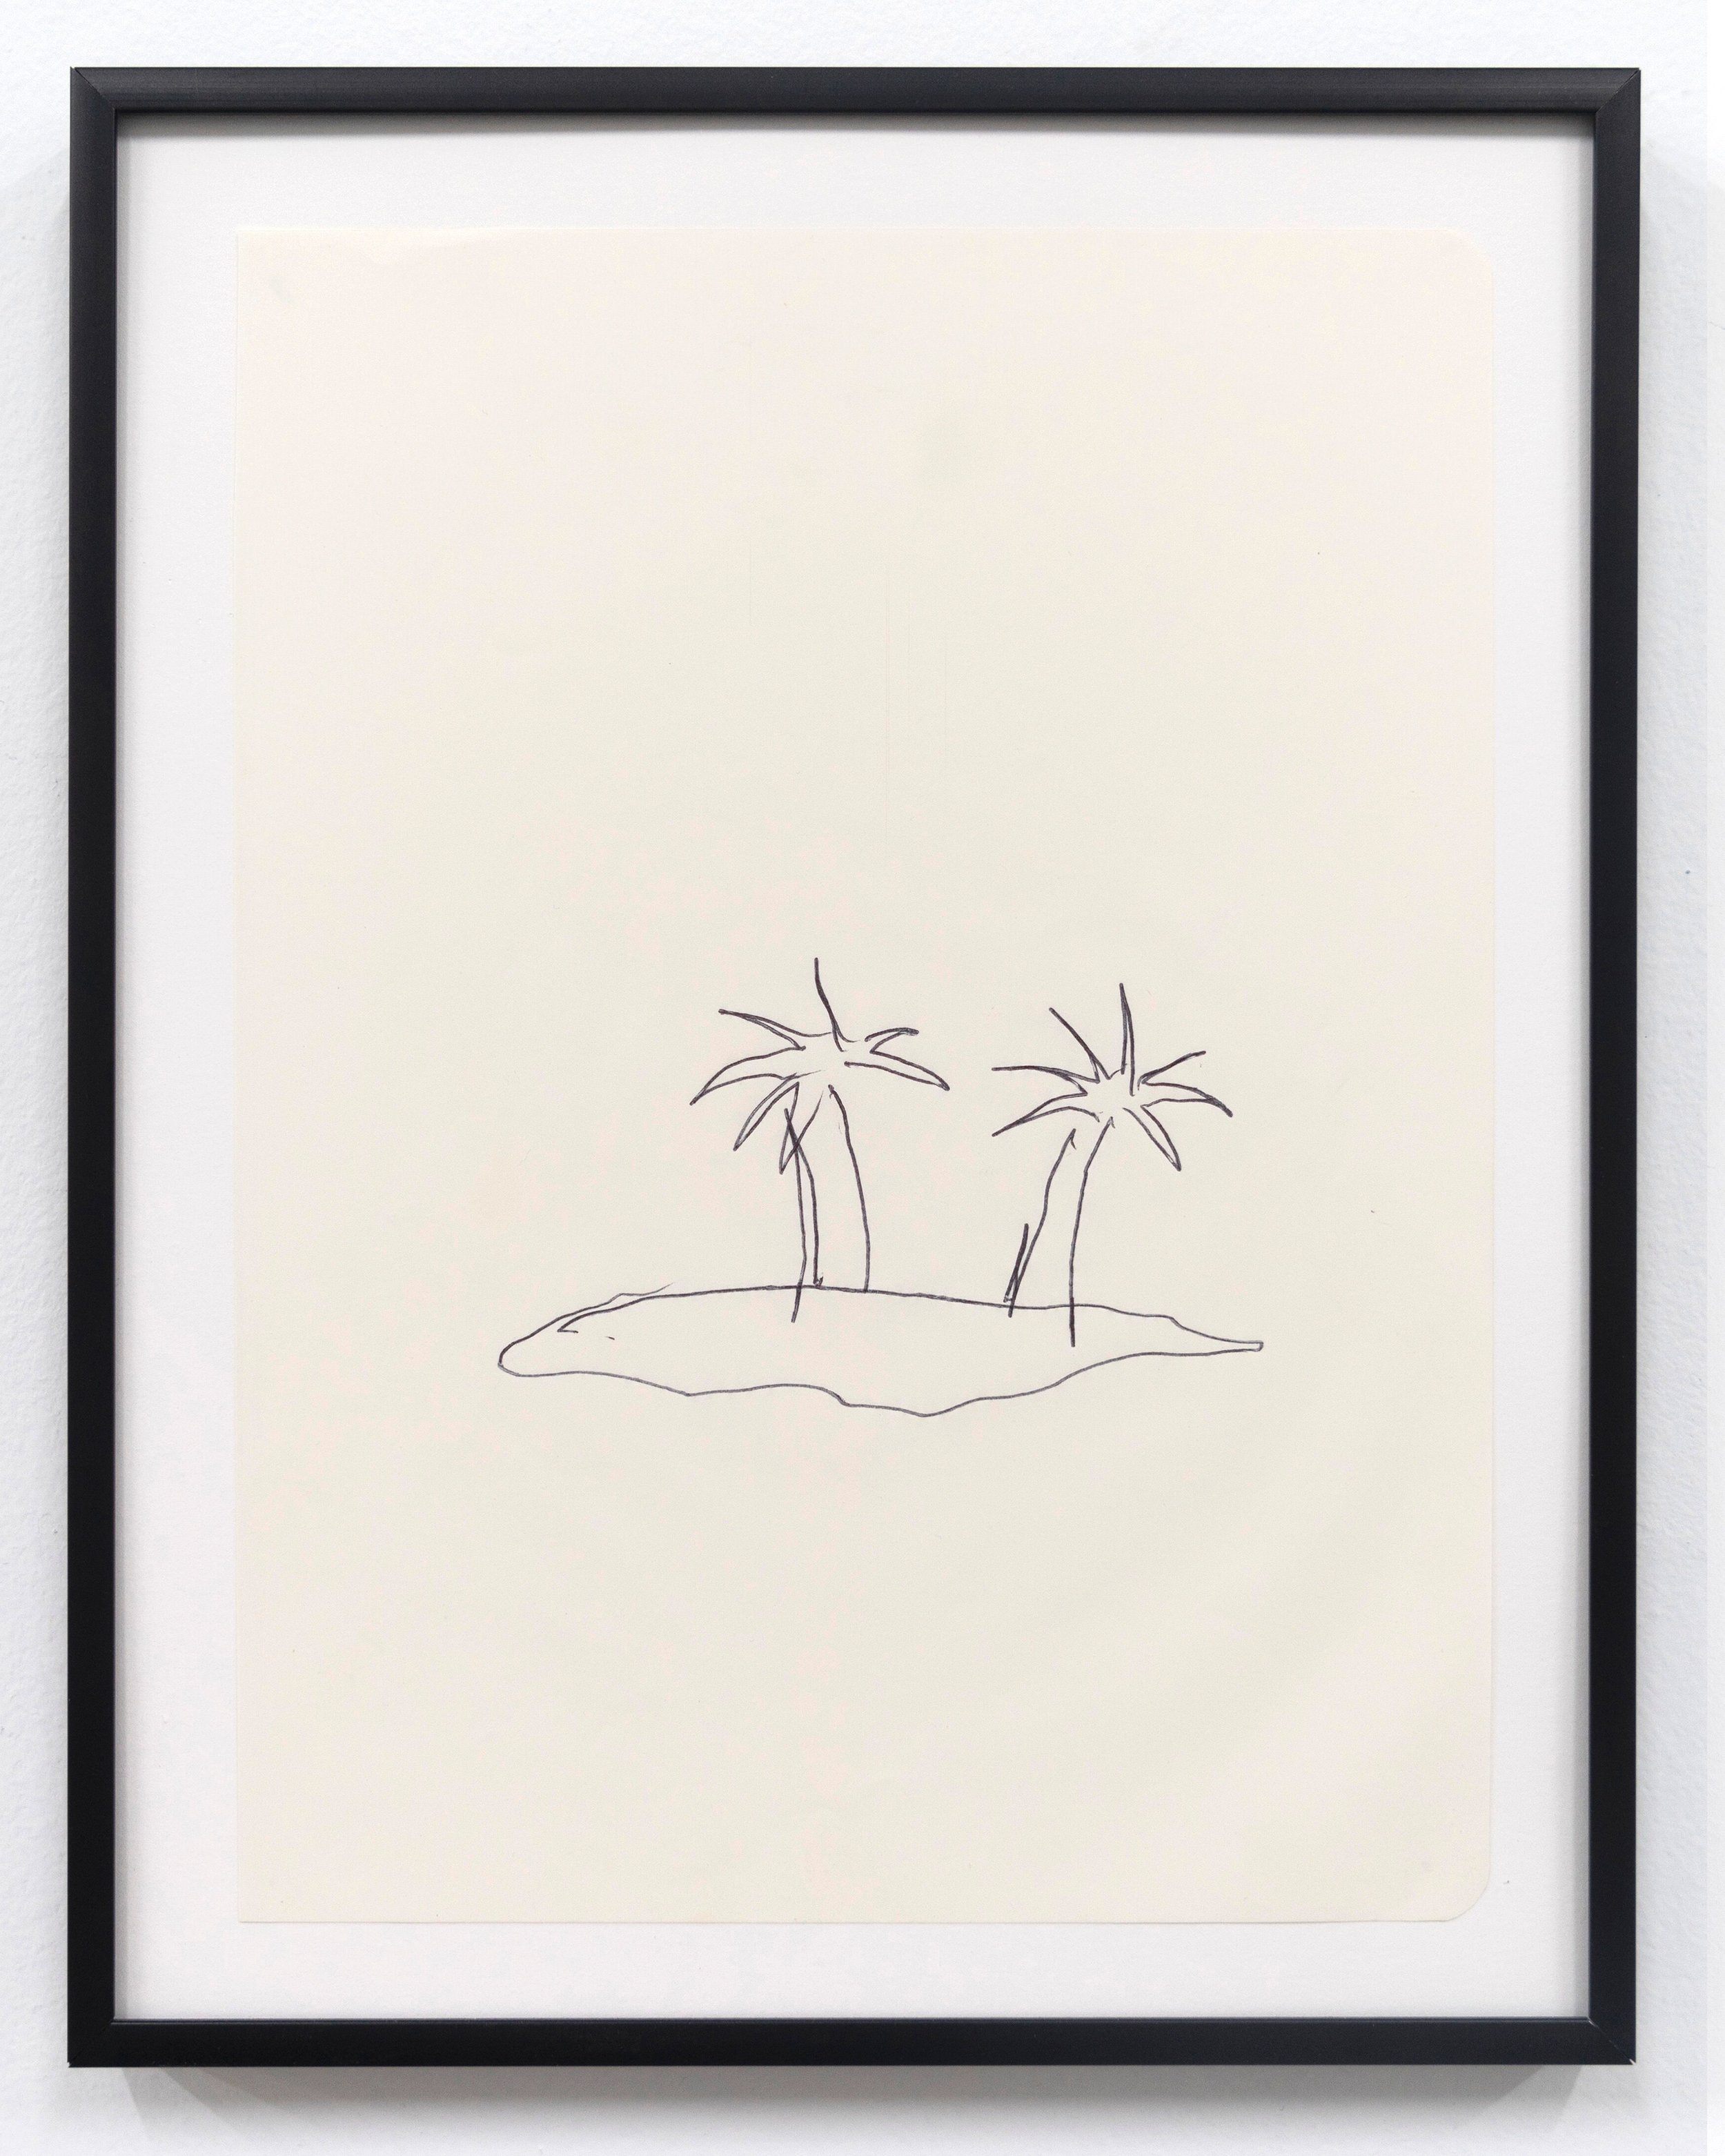   Emilie Gossiaux    The Beach , 2018 Ink on newsprint   11 1/2 x 9 1/8 inches 29.2 x 23.2 cm  